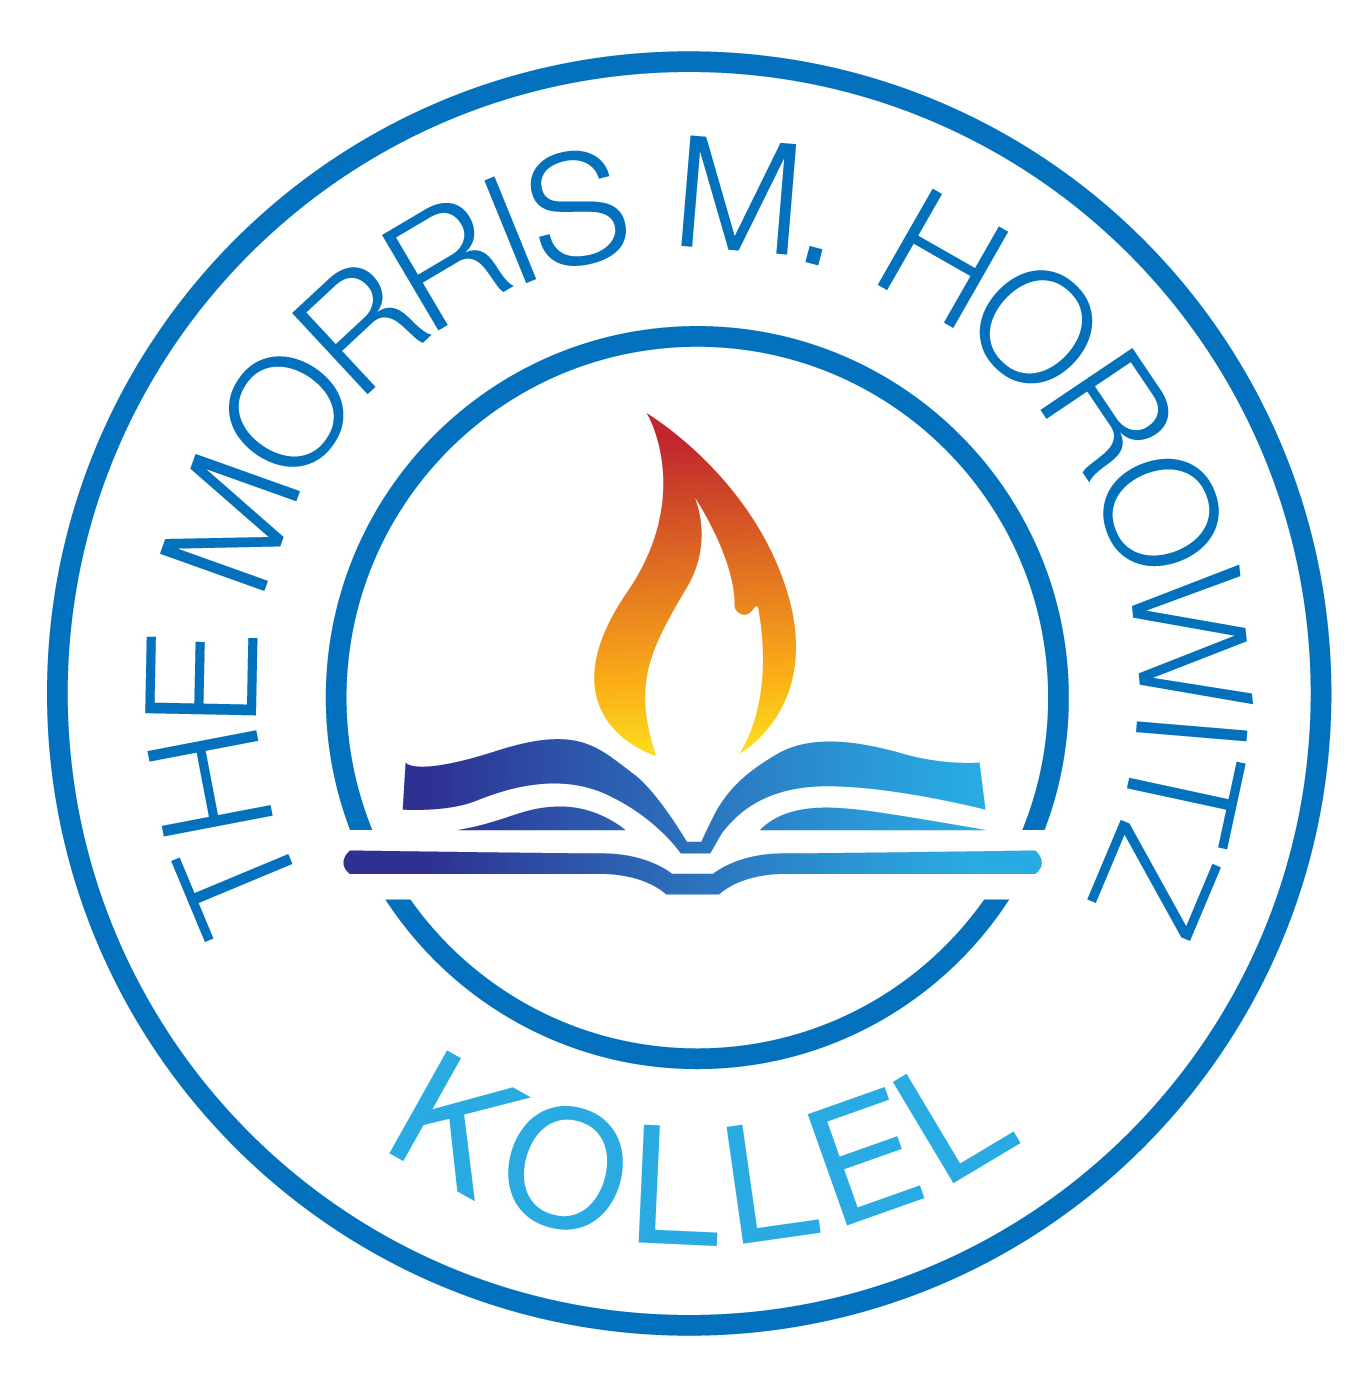 The Morris M. Horowitz Kollel